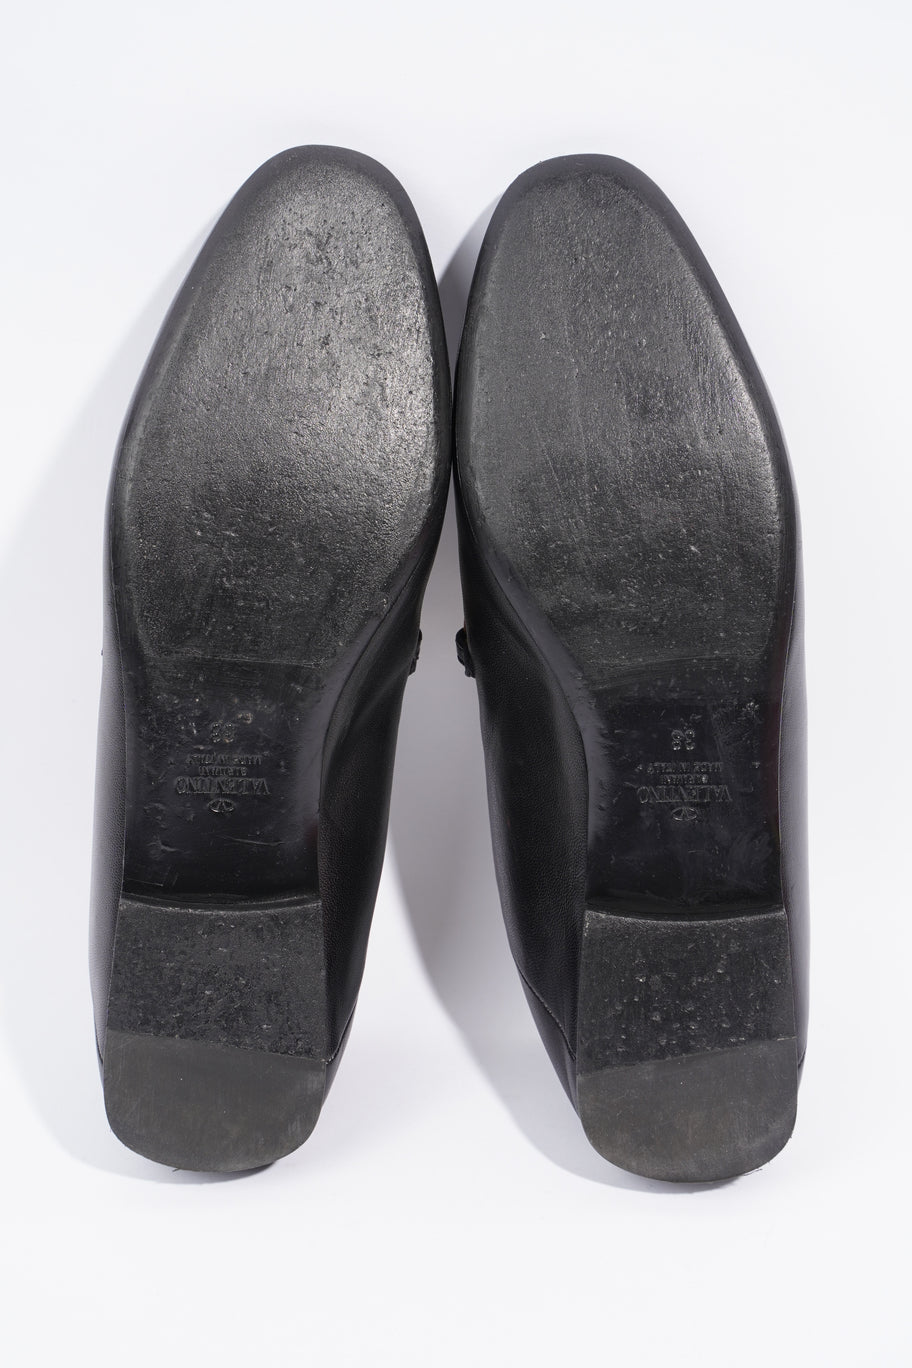 Roman Stud Loafers Black Leather EU 38 UK 5 Image 7